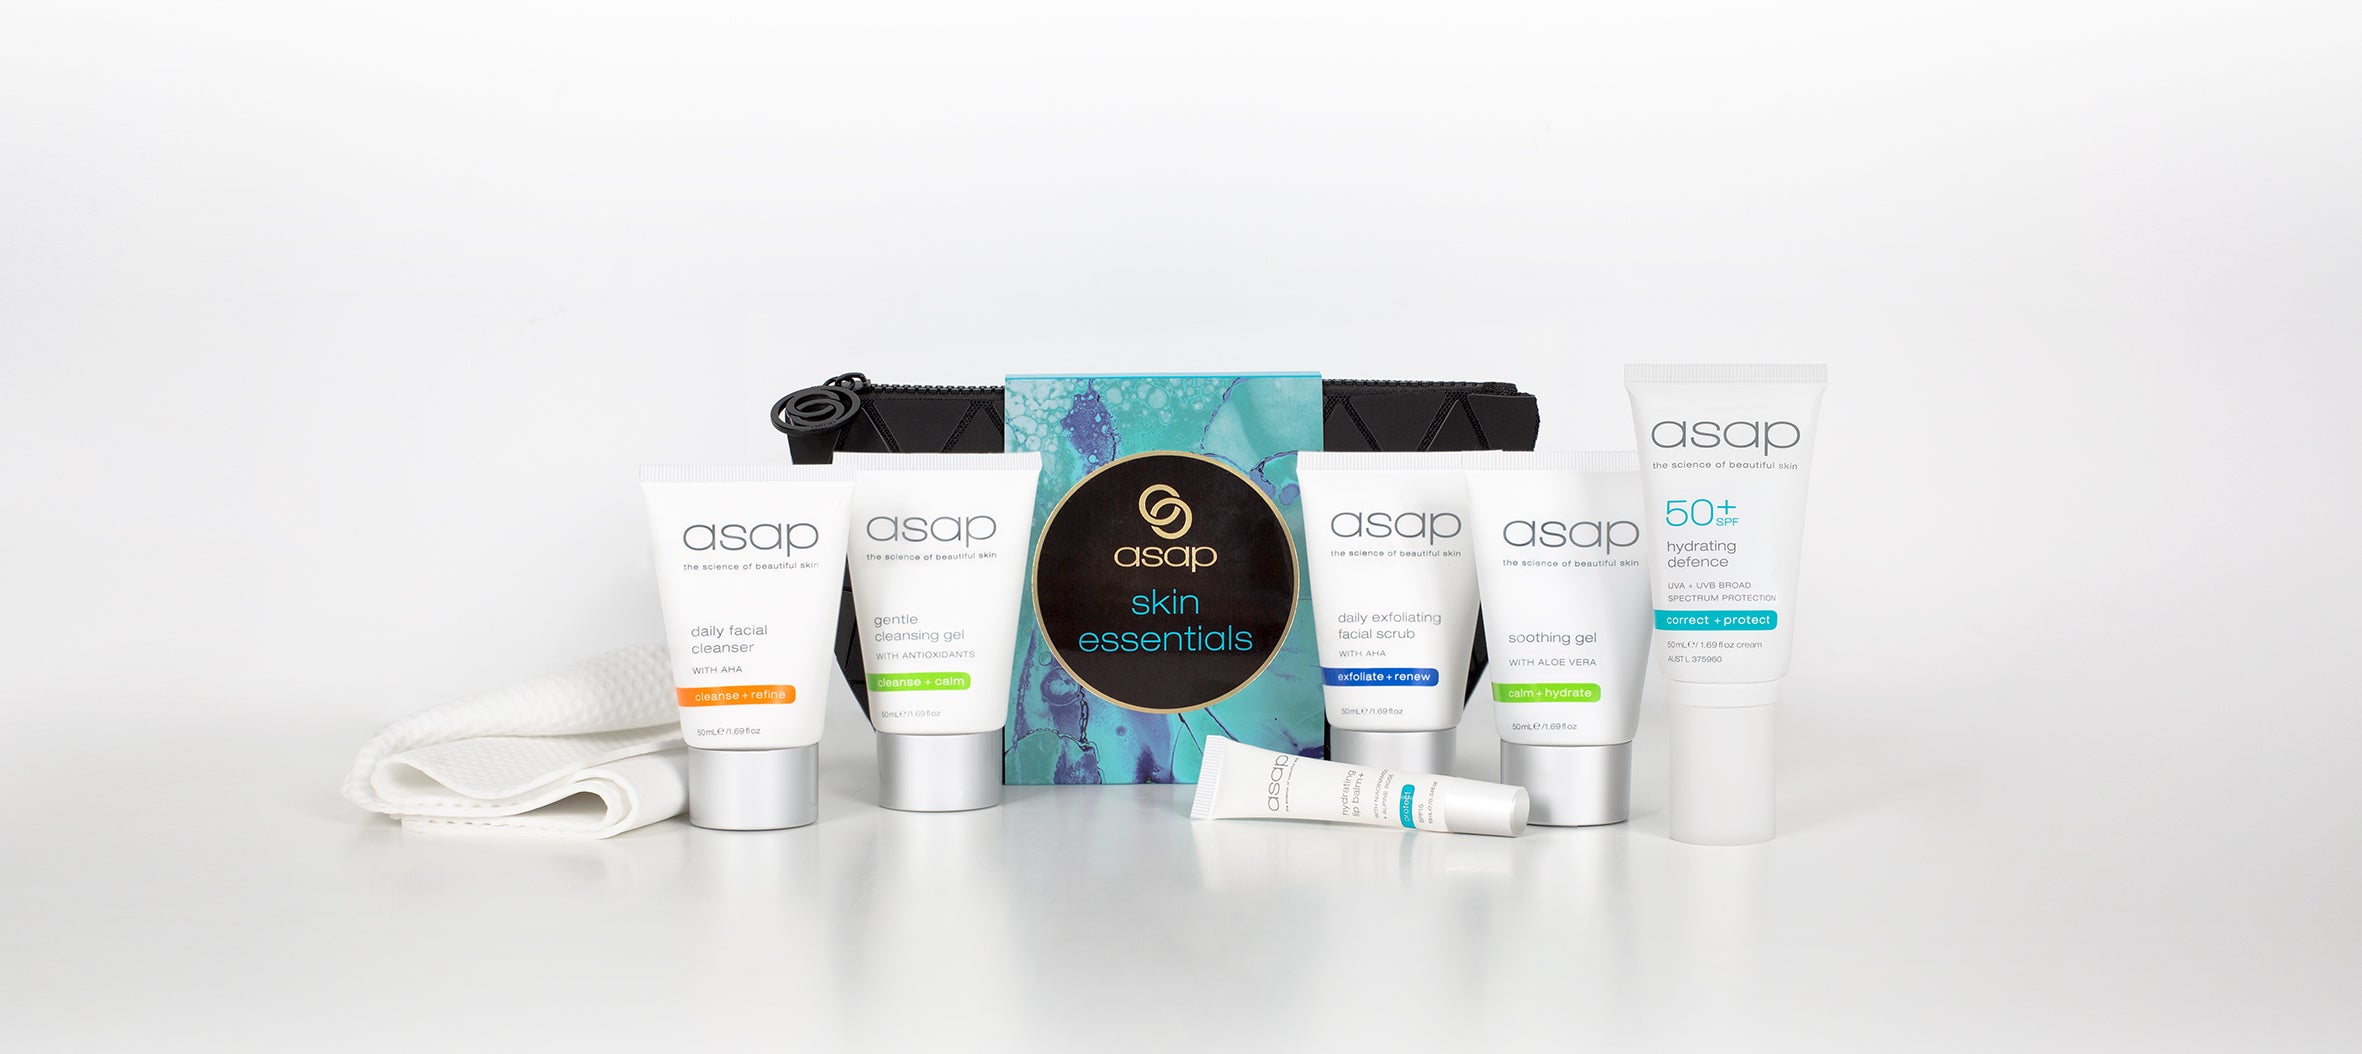 ASAP Skin Essentials Pack **Top Seller** - Exquisite Laser Clinic 